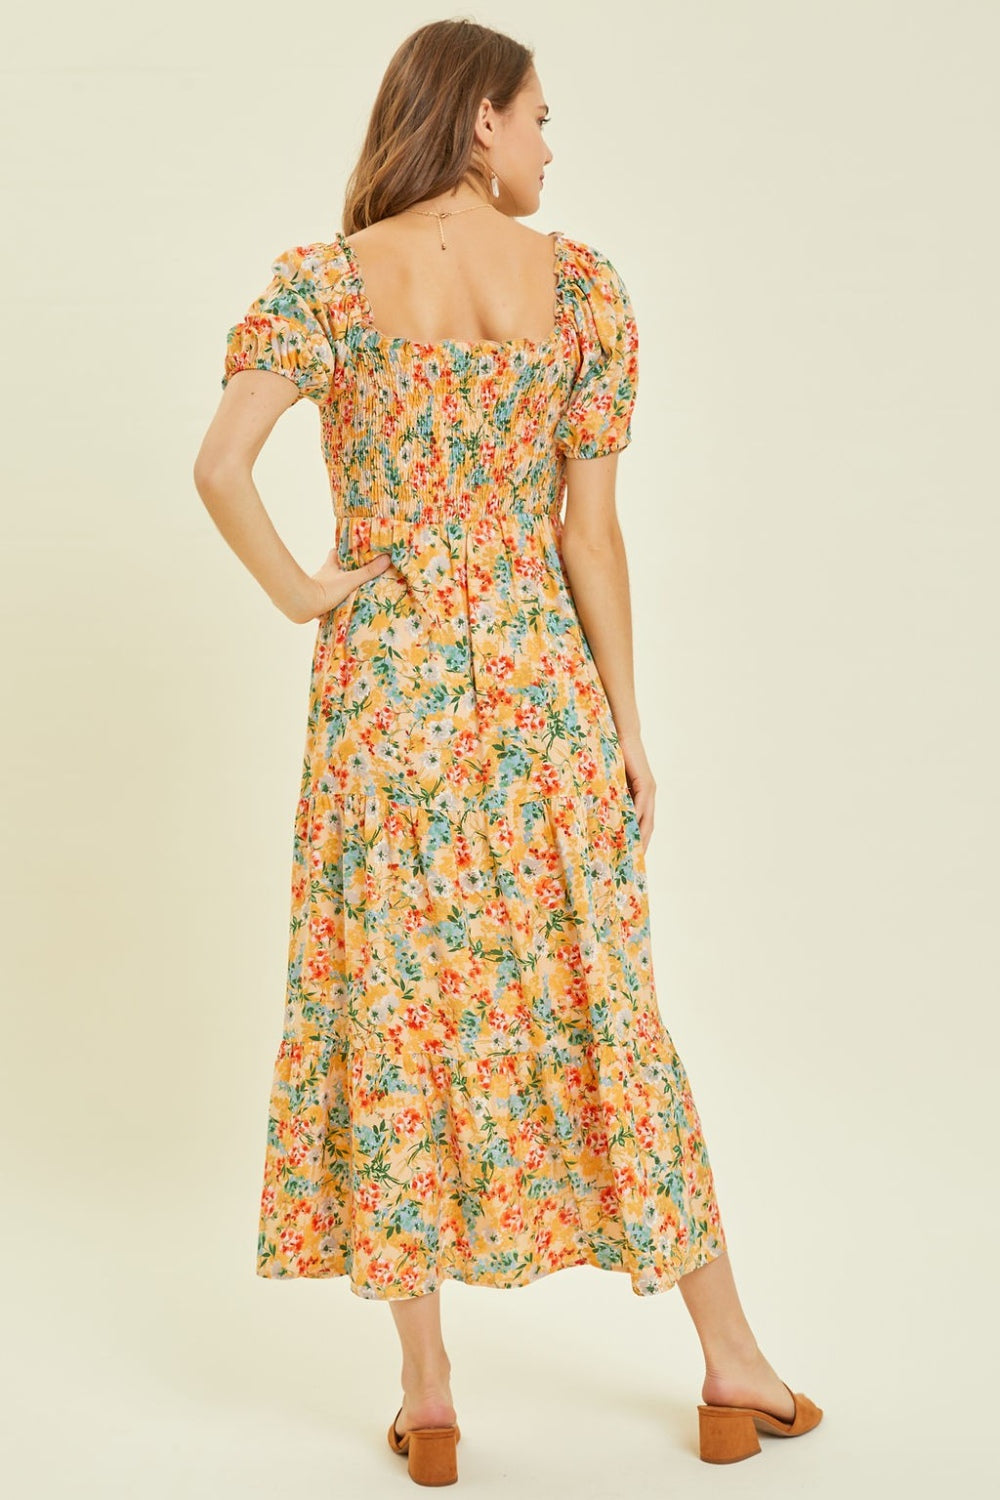 Hazel Blues® |  HEYSON Floral Smocked Tiered Midi Dress